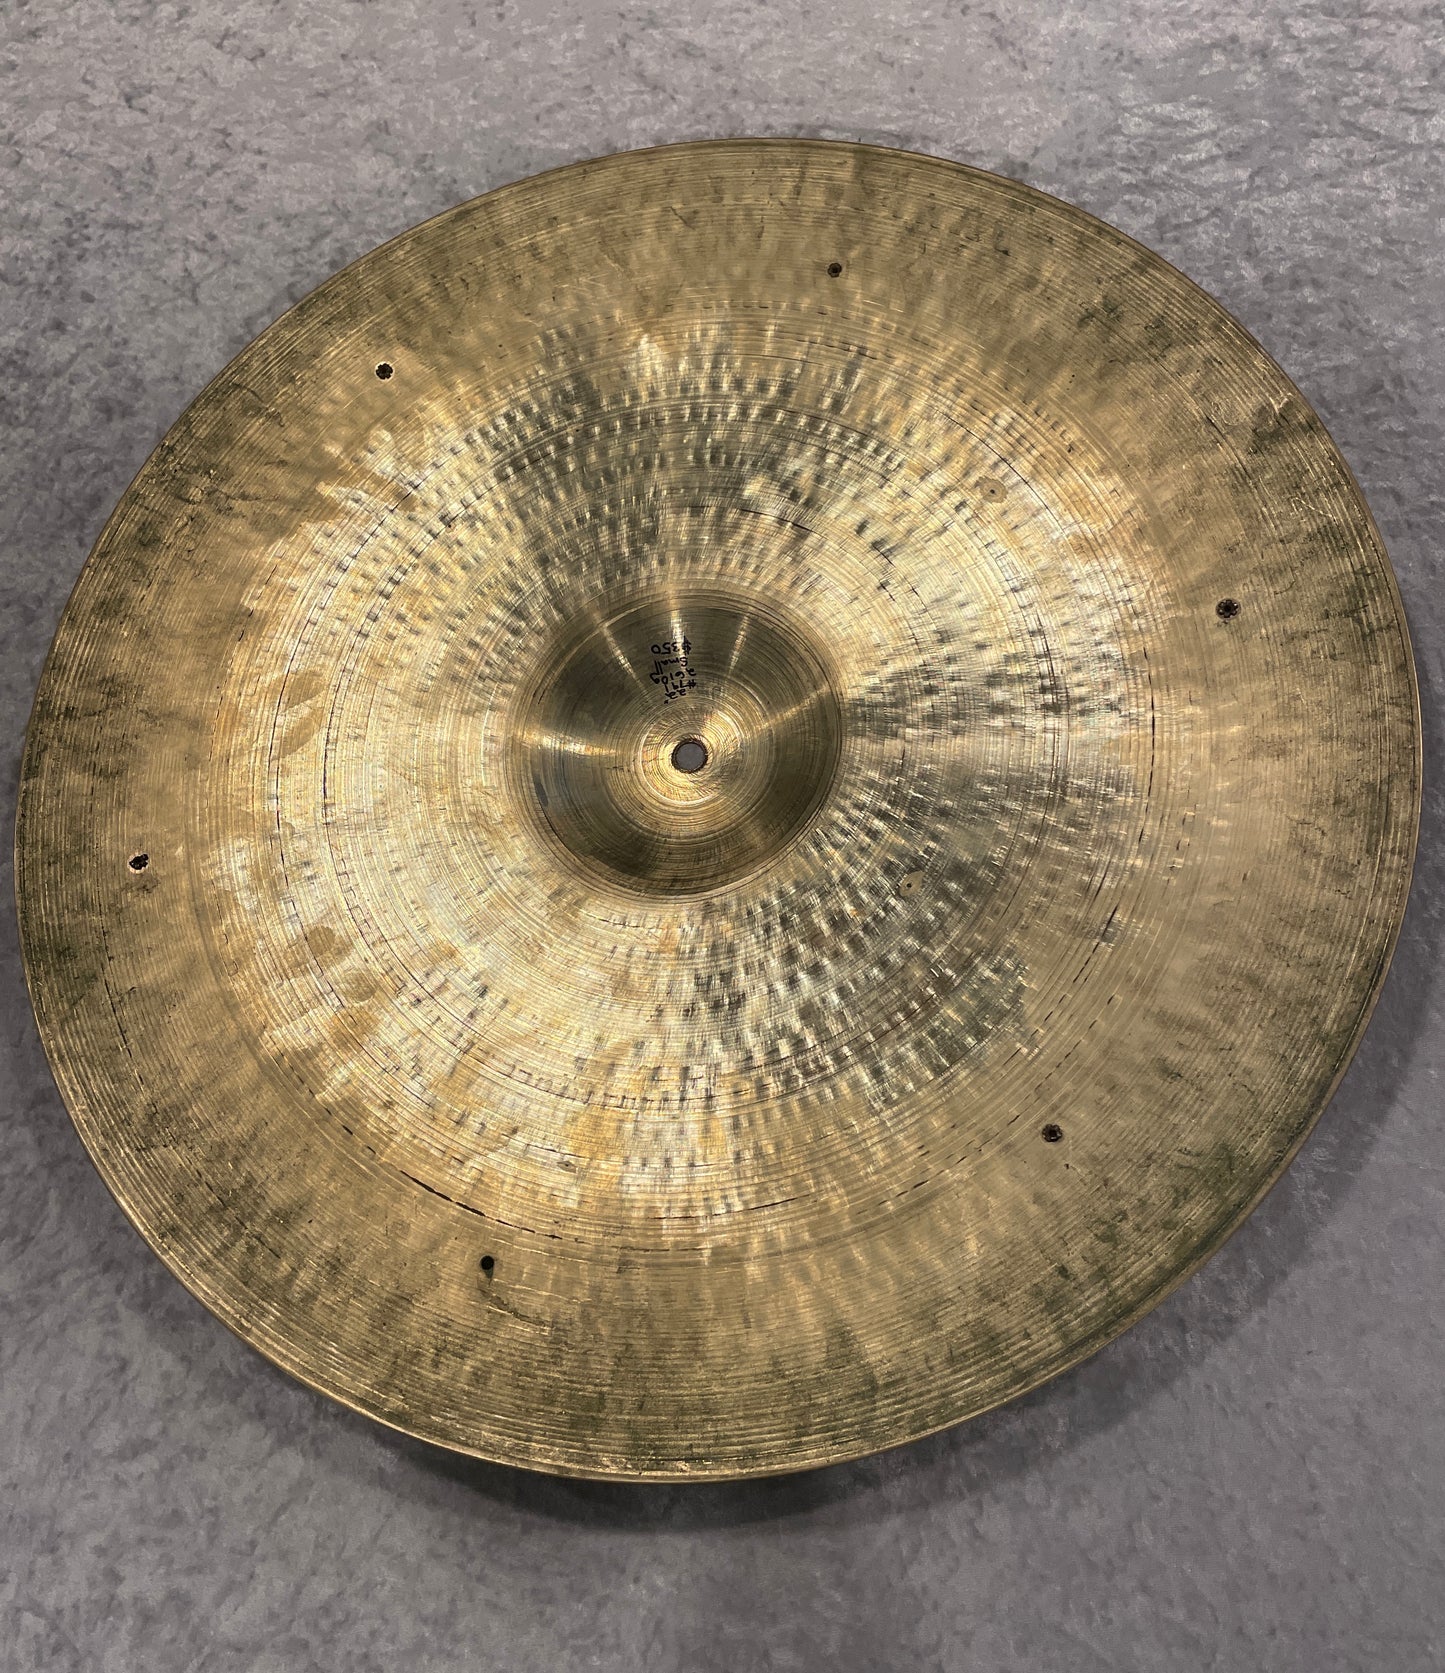 22" Zildjian A 1950s Small Stamp Ride Cymbal w/ Factory Rivets 2610g #791 *Video Demo*